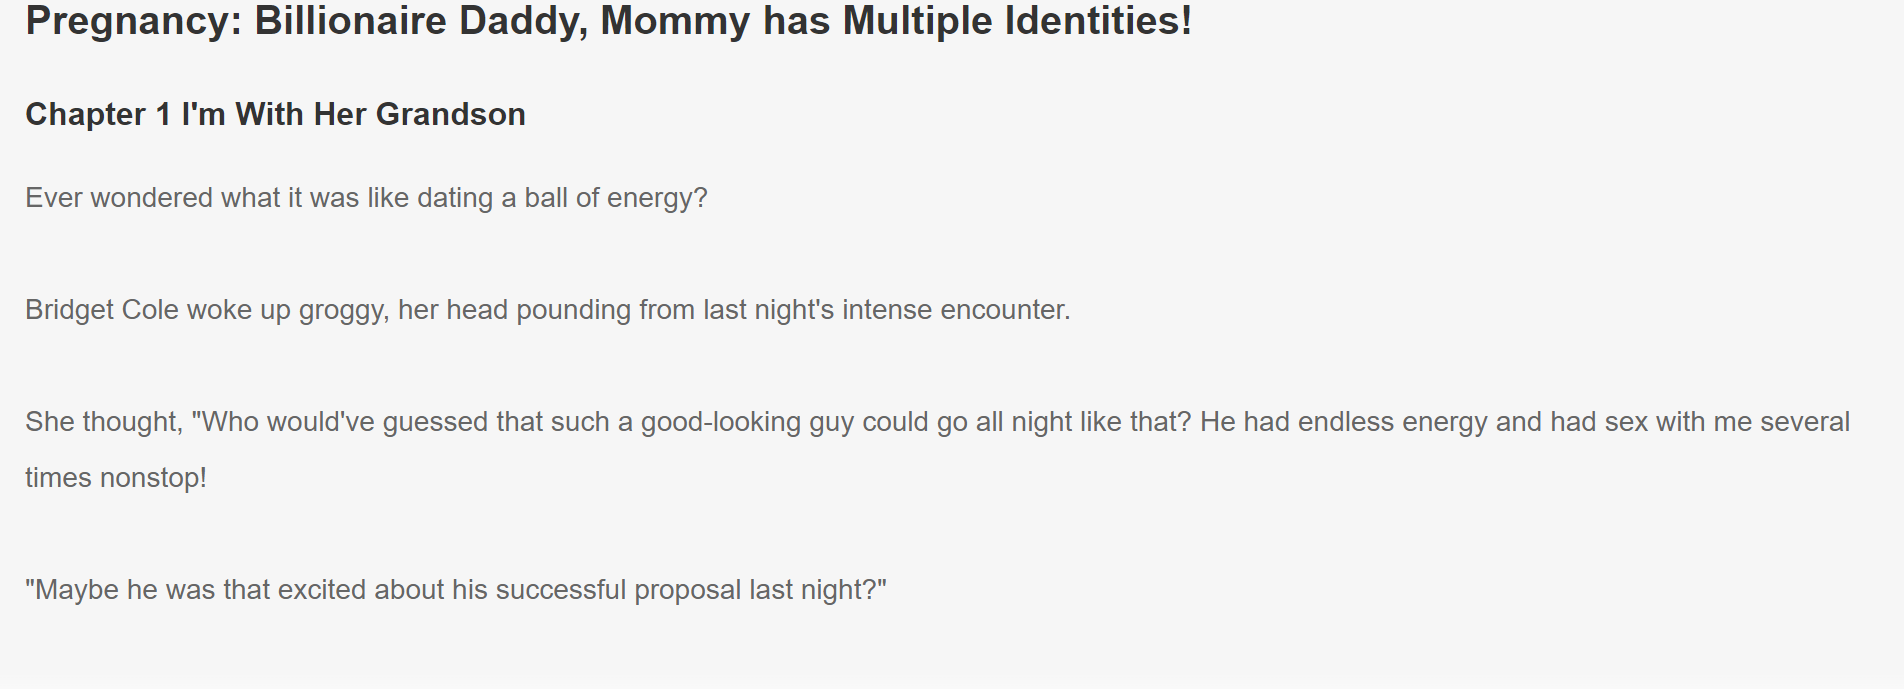 Pregnancy Billionaire Daddy, Mommy has Multiple Identities